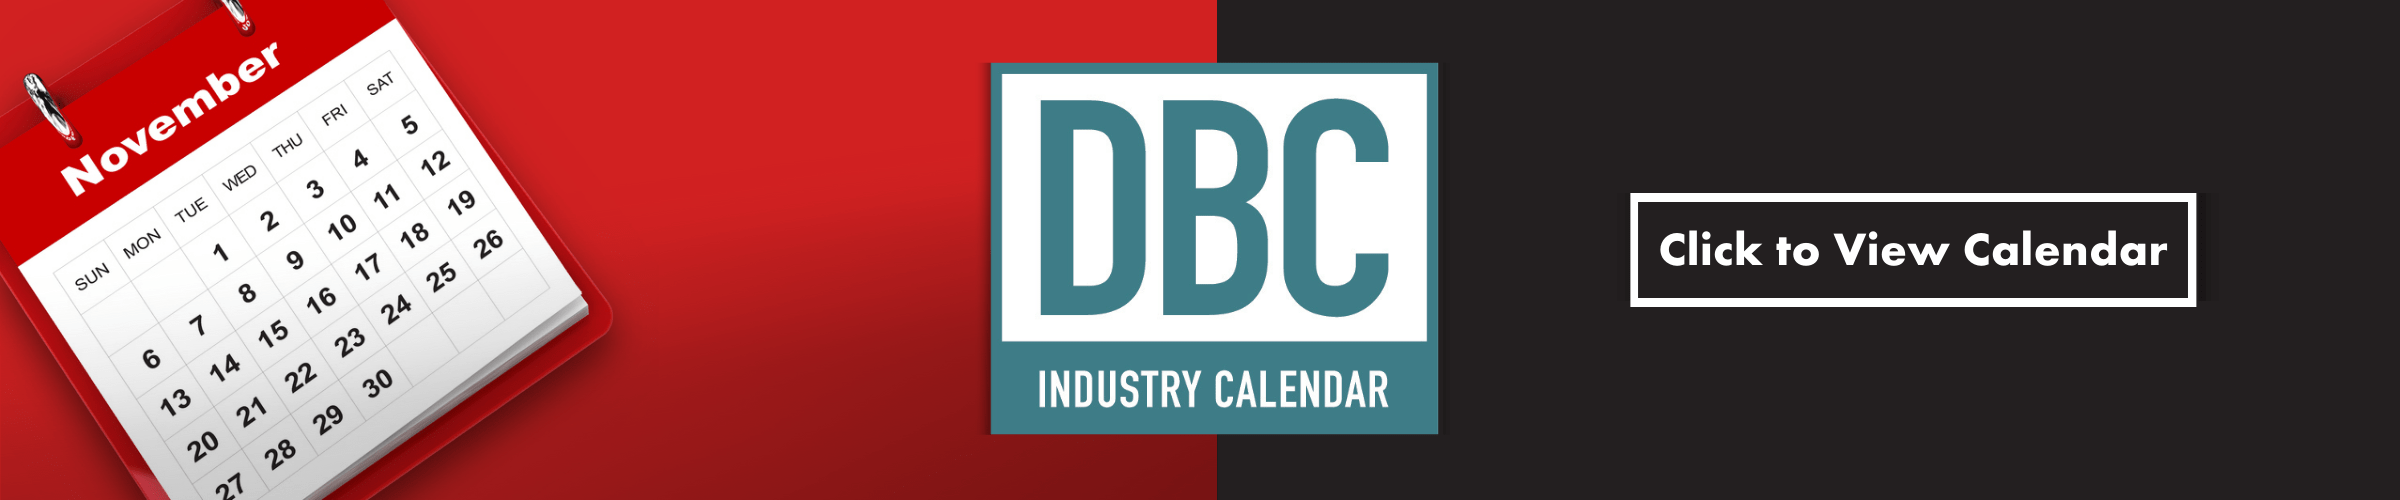 DBC Industry Calendar